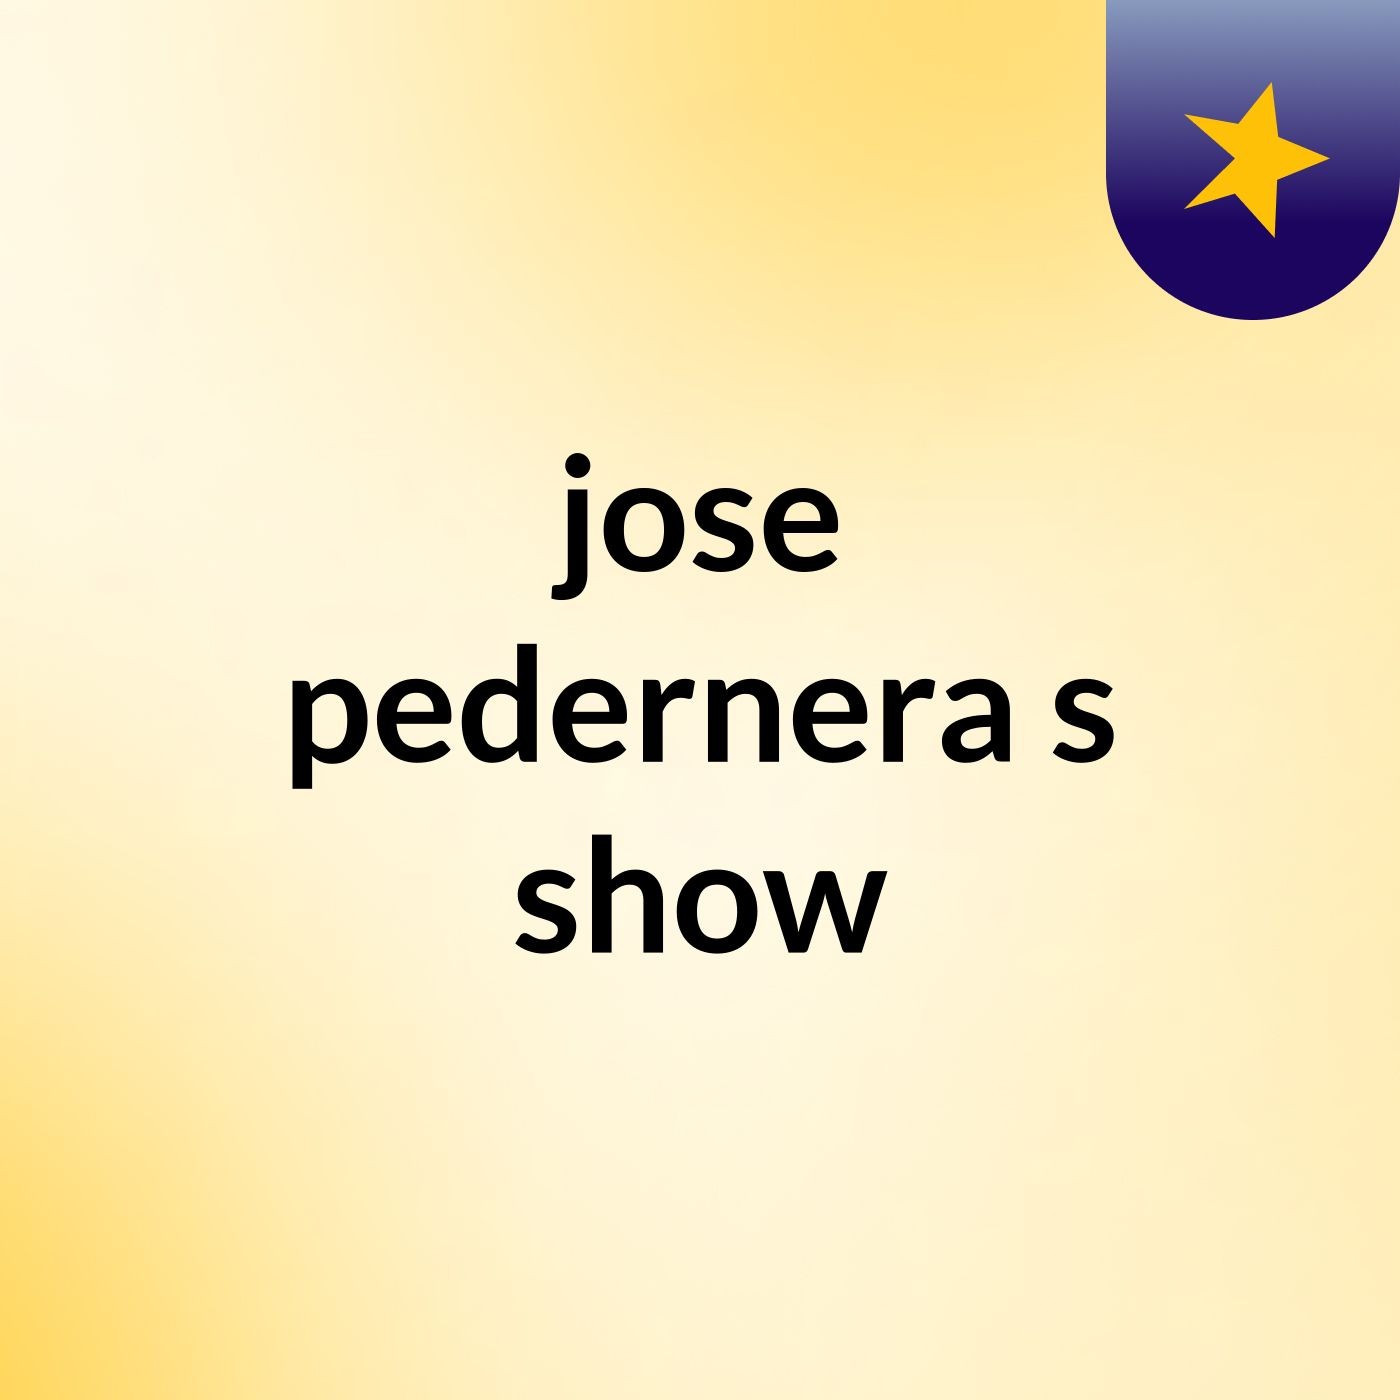 jose pedernera's show